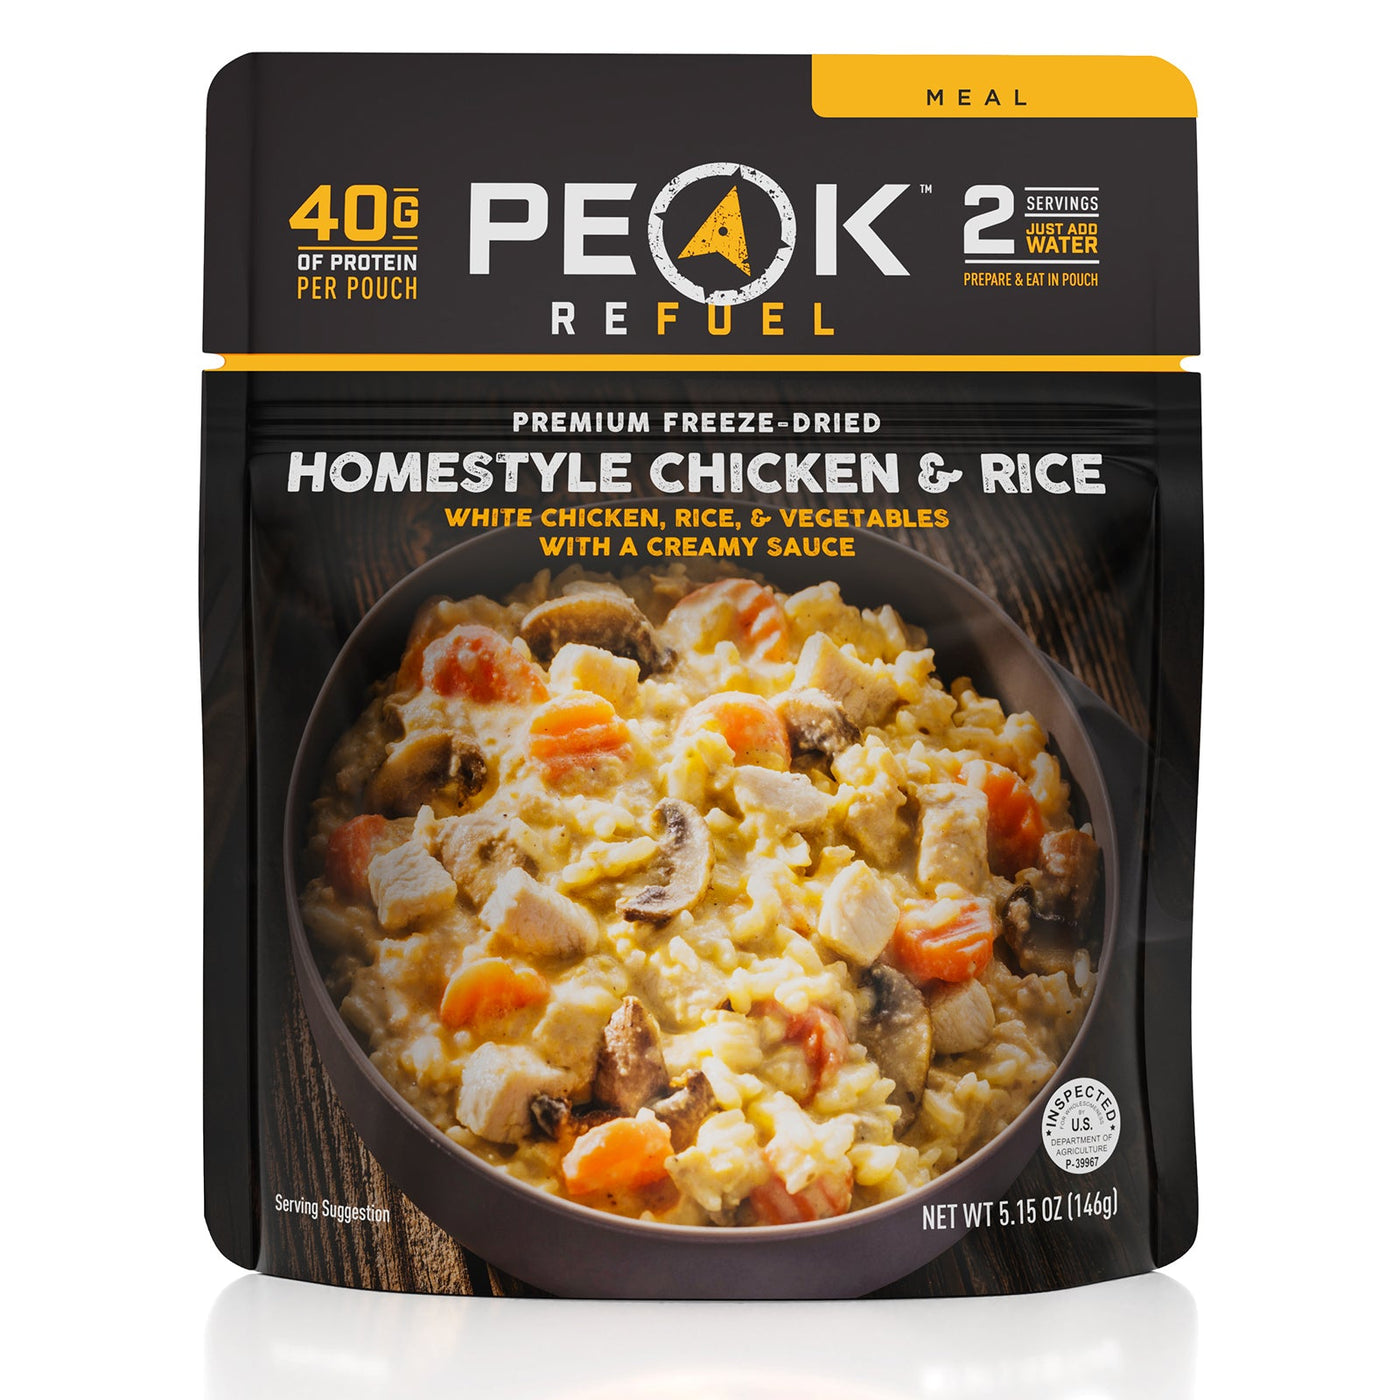 Peak Refuel,  Homestyle Chicken and Rice